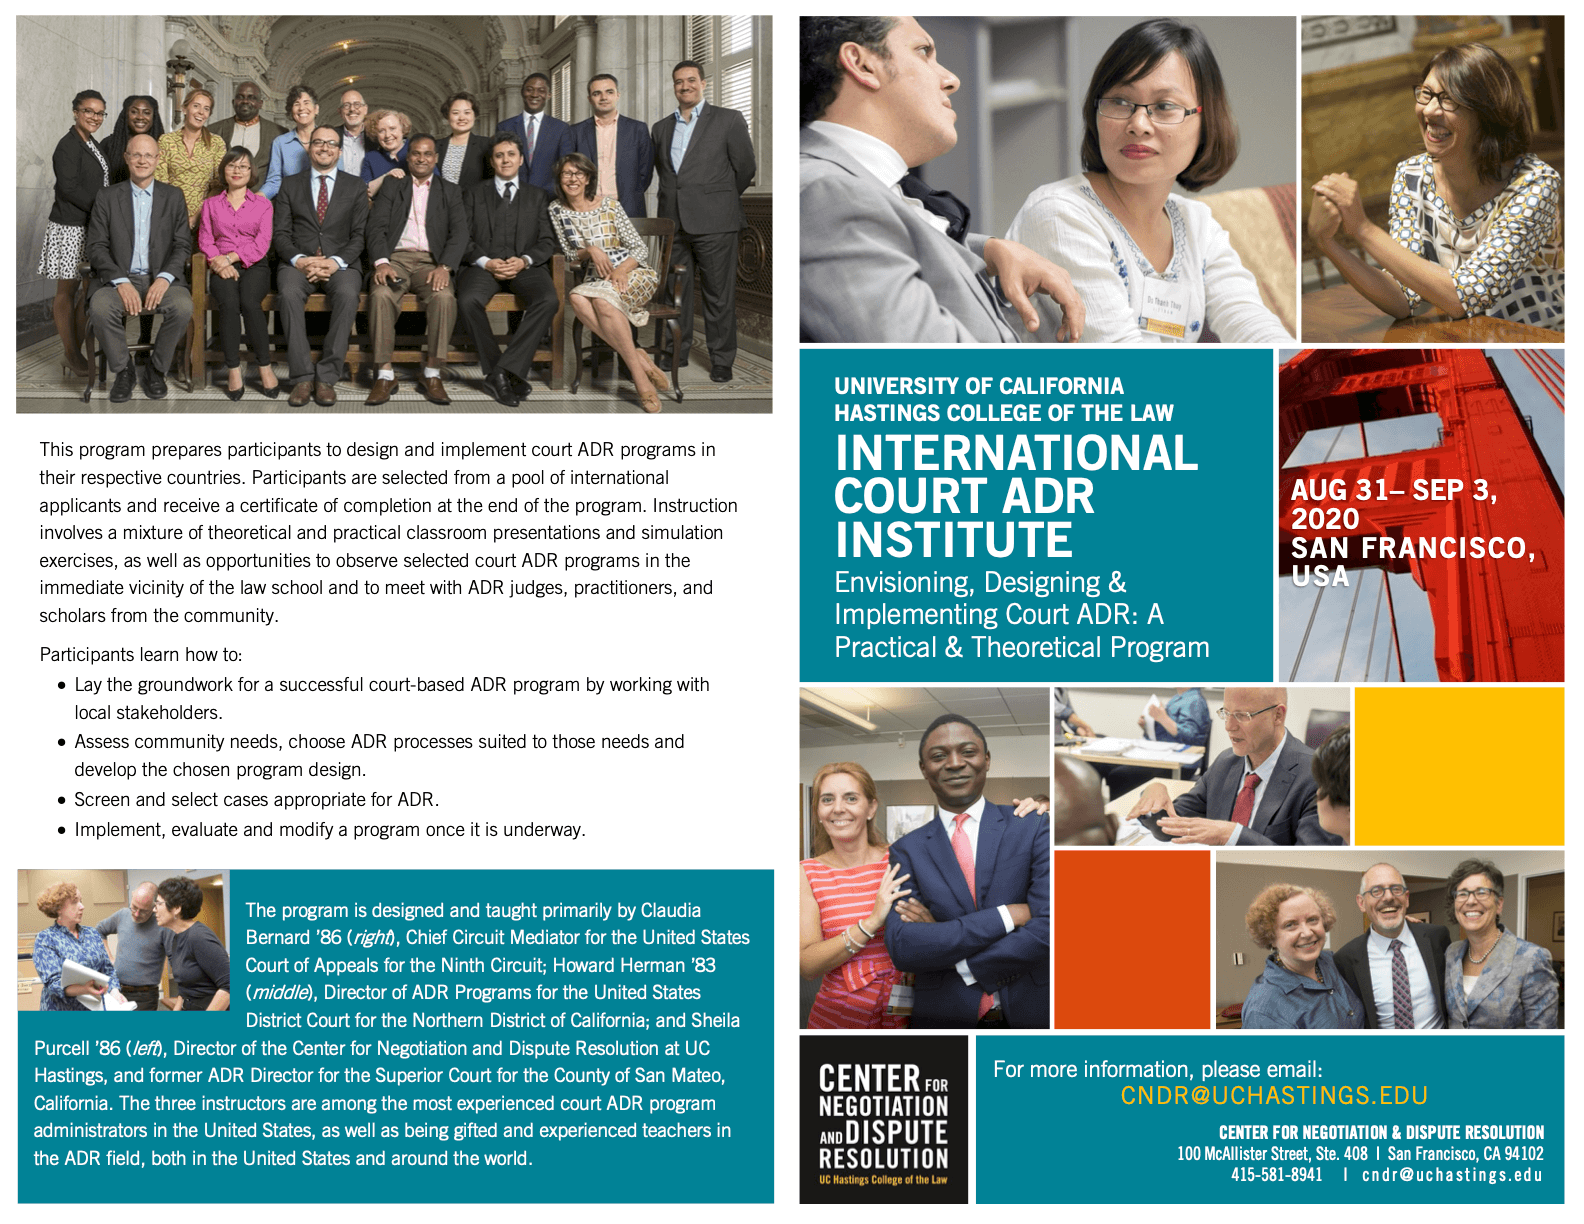 international court ADR institute